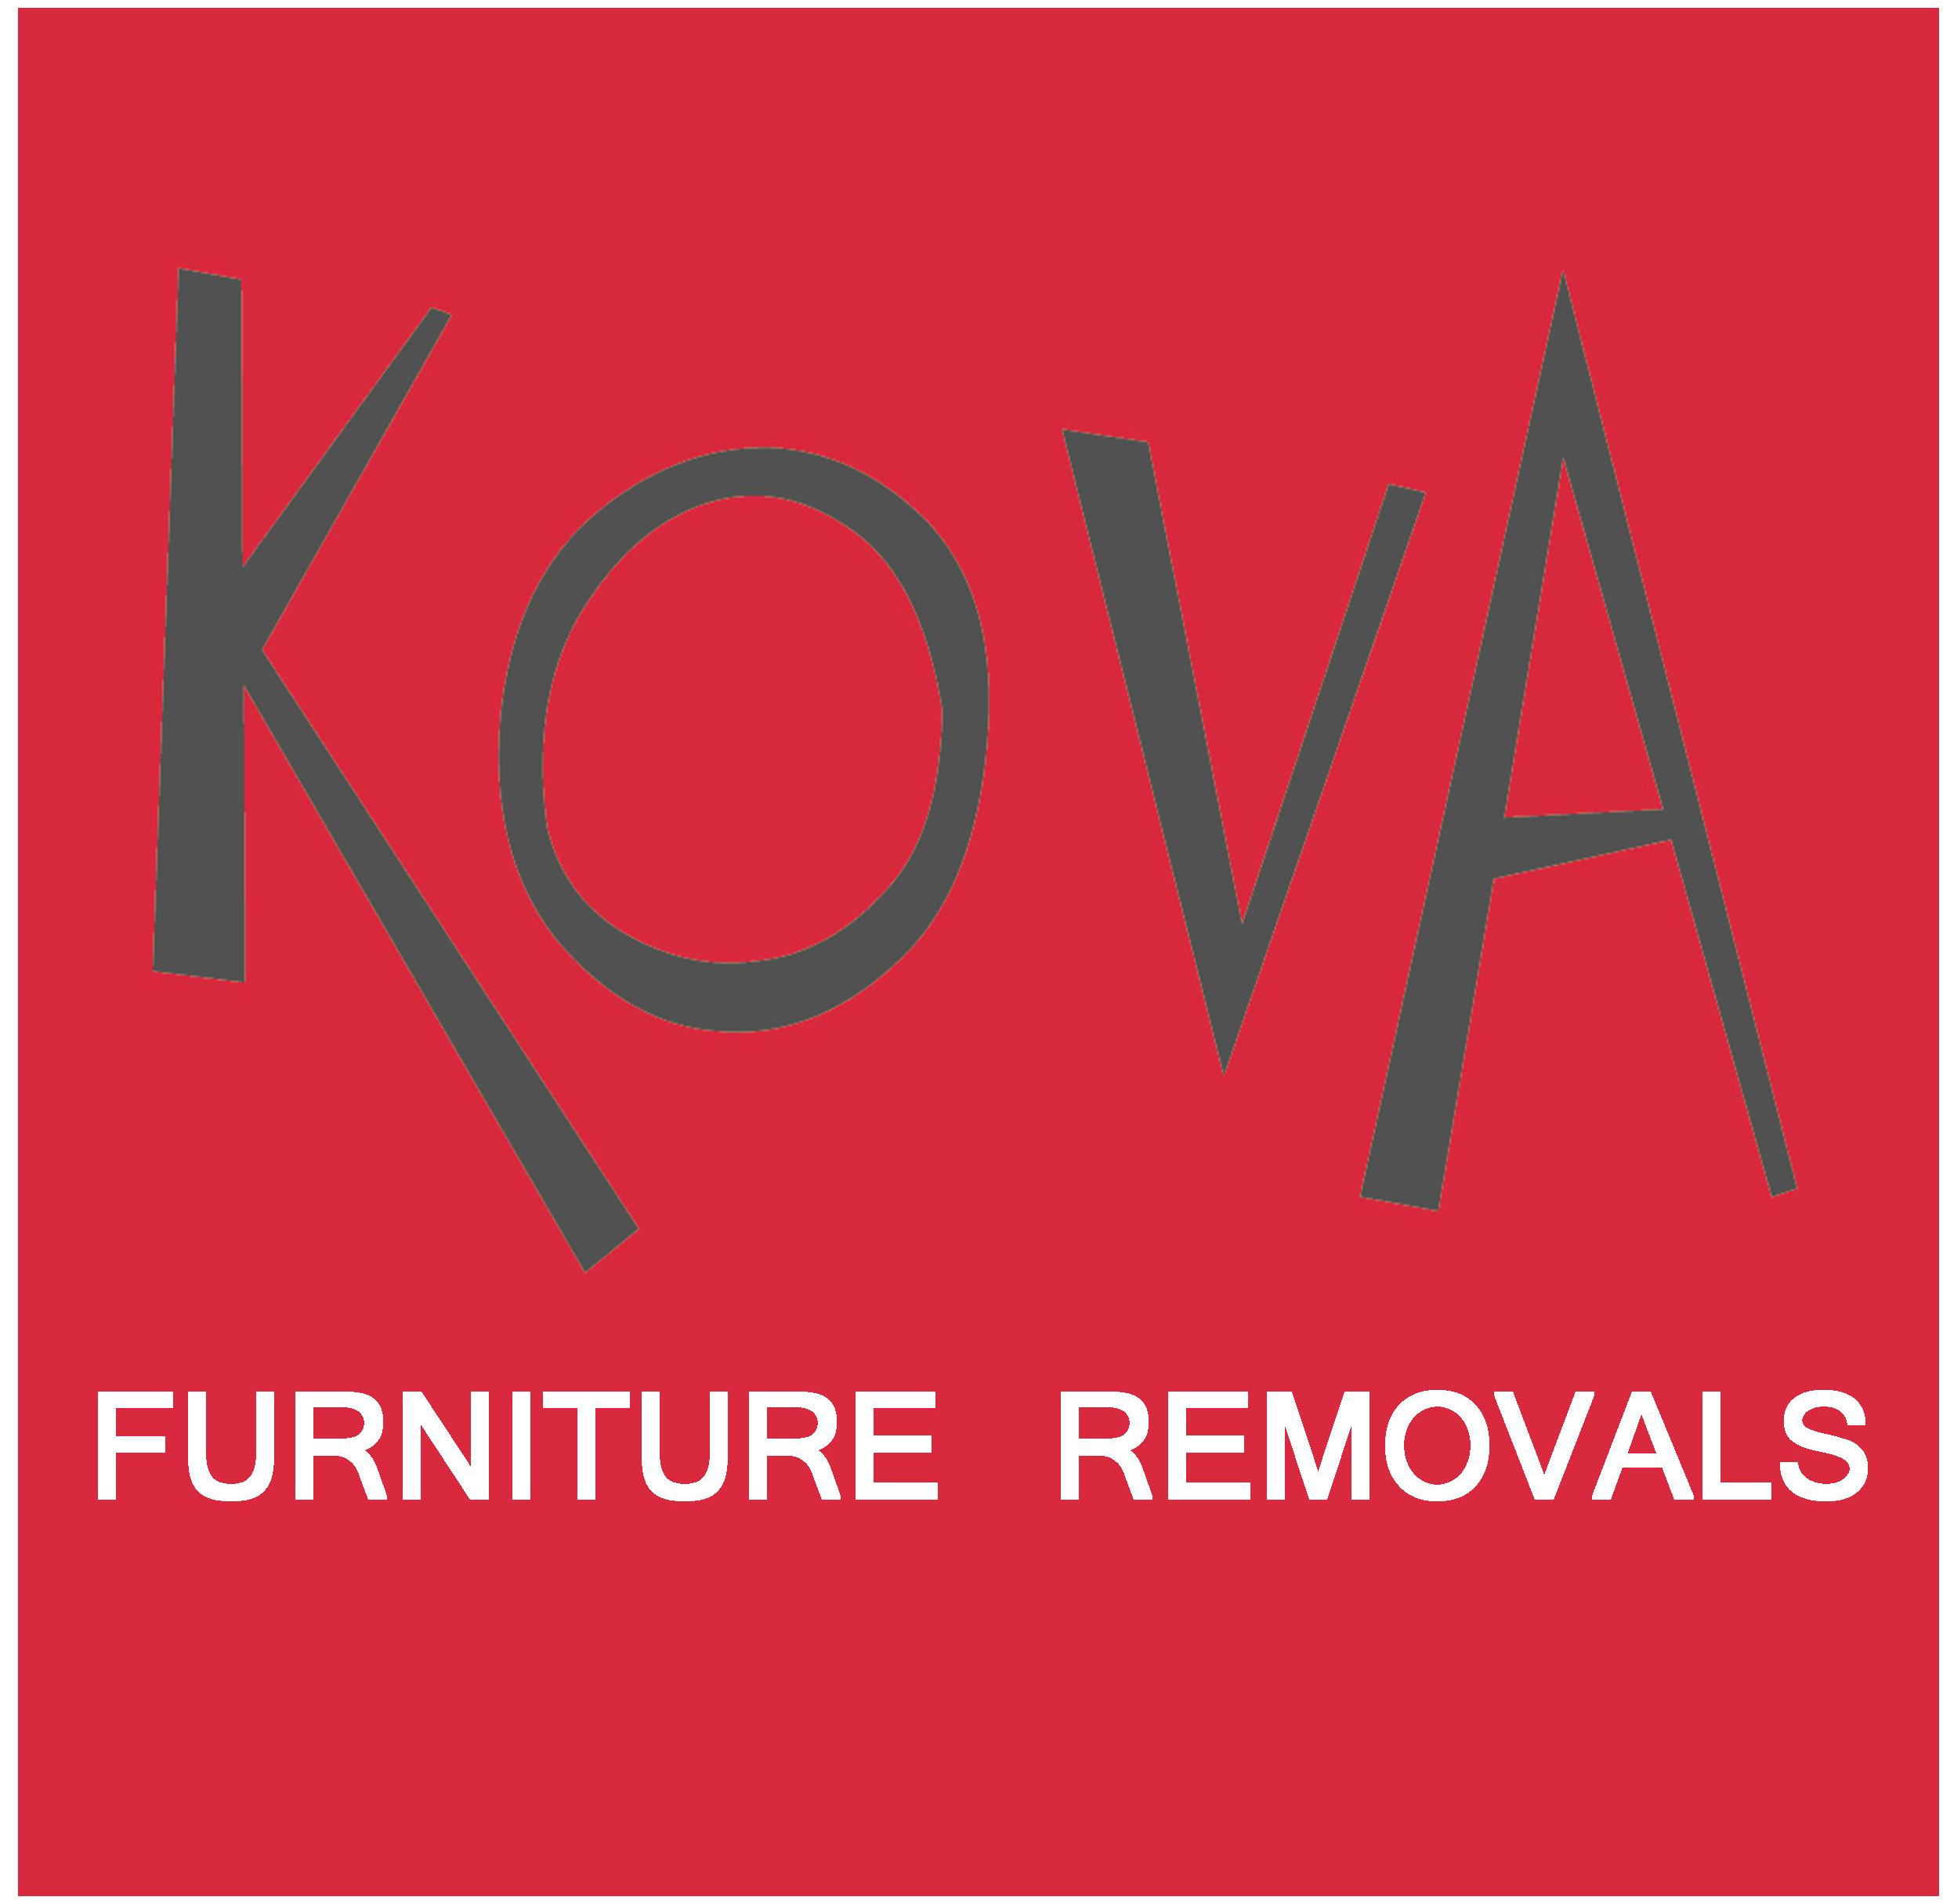 Kova Furniture Removals